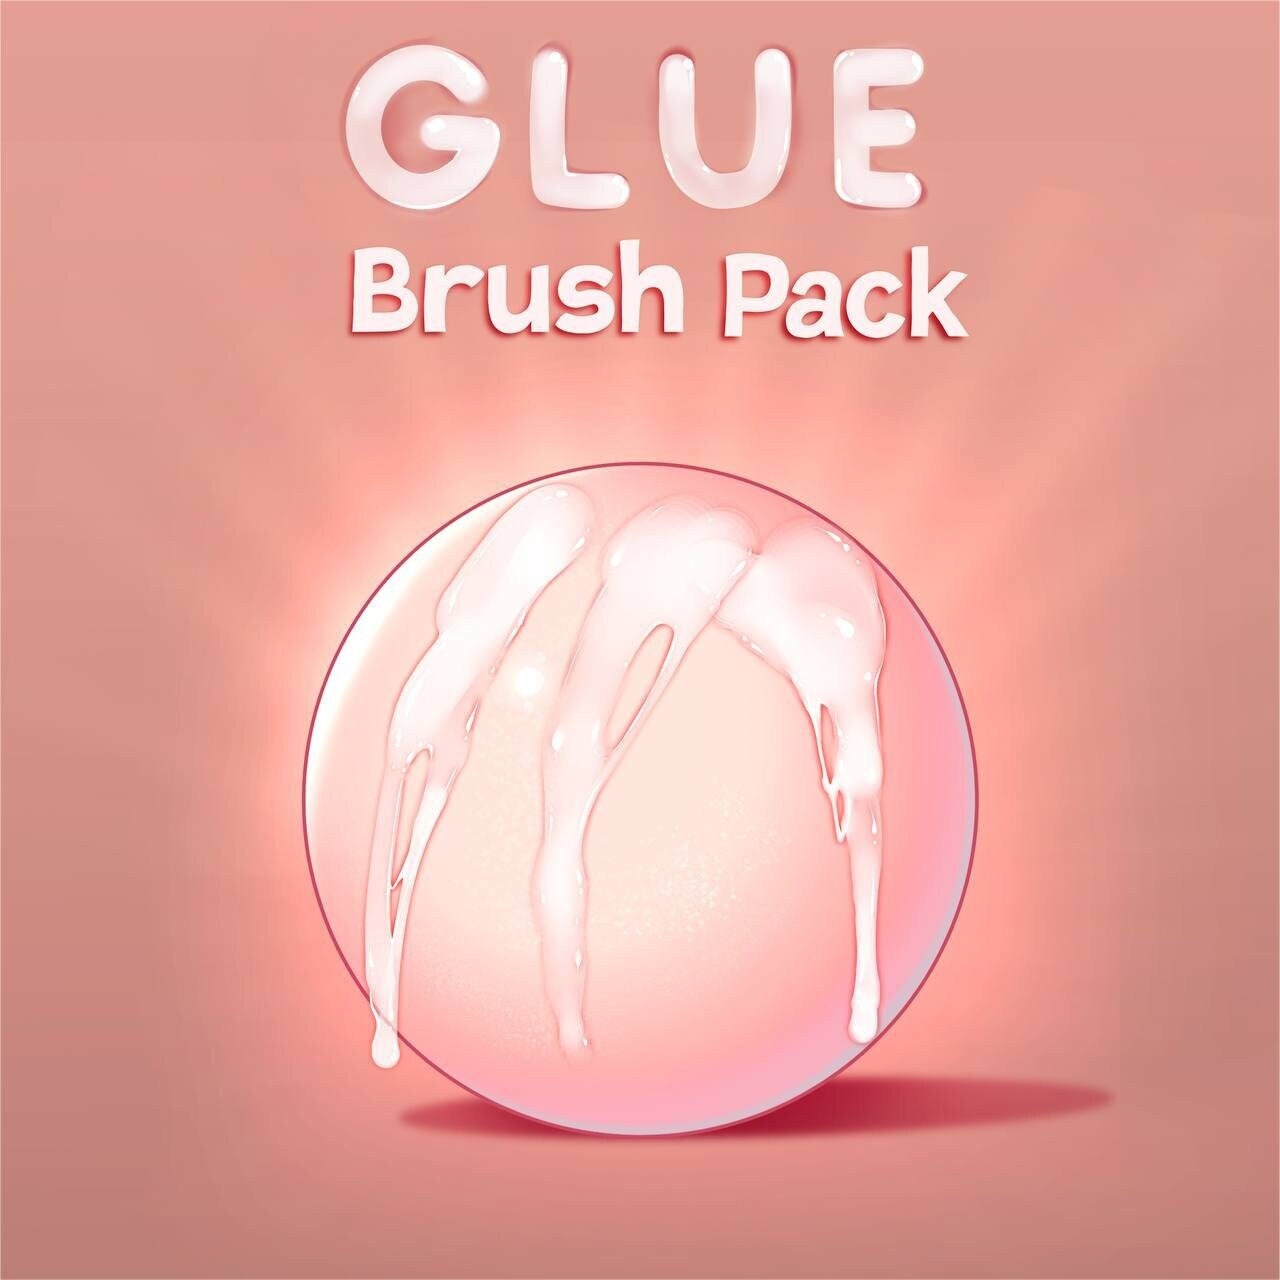 Glue Brush Pack for Procreate 